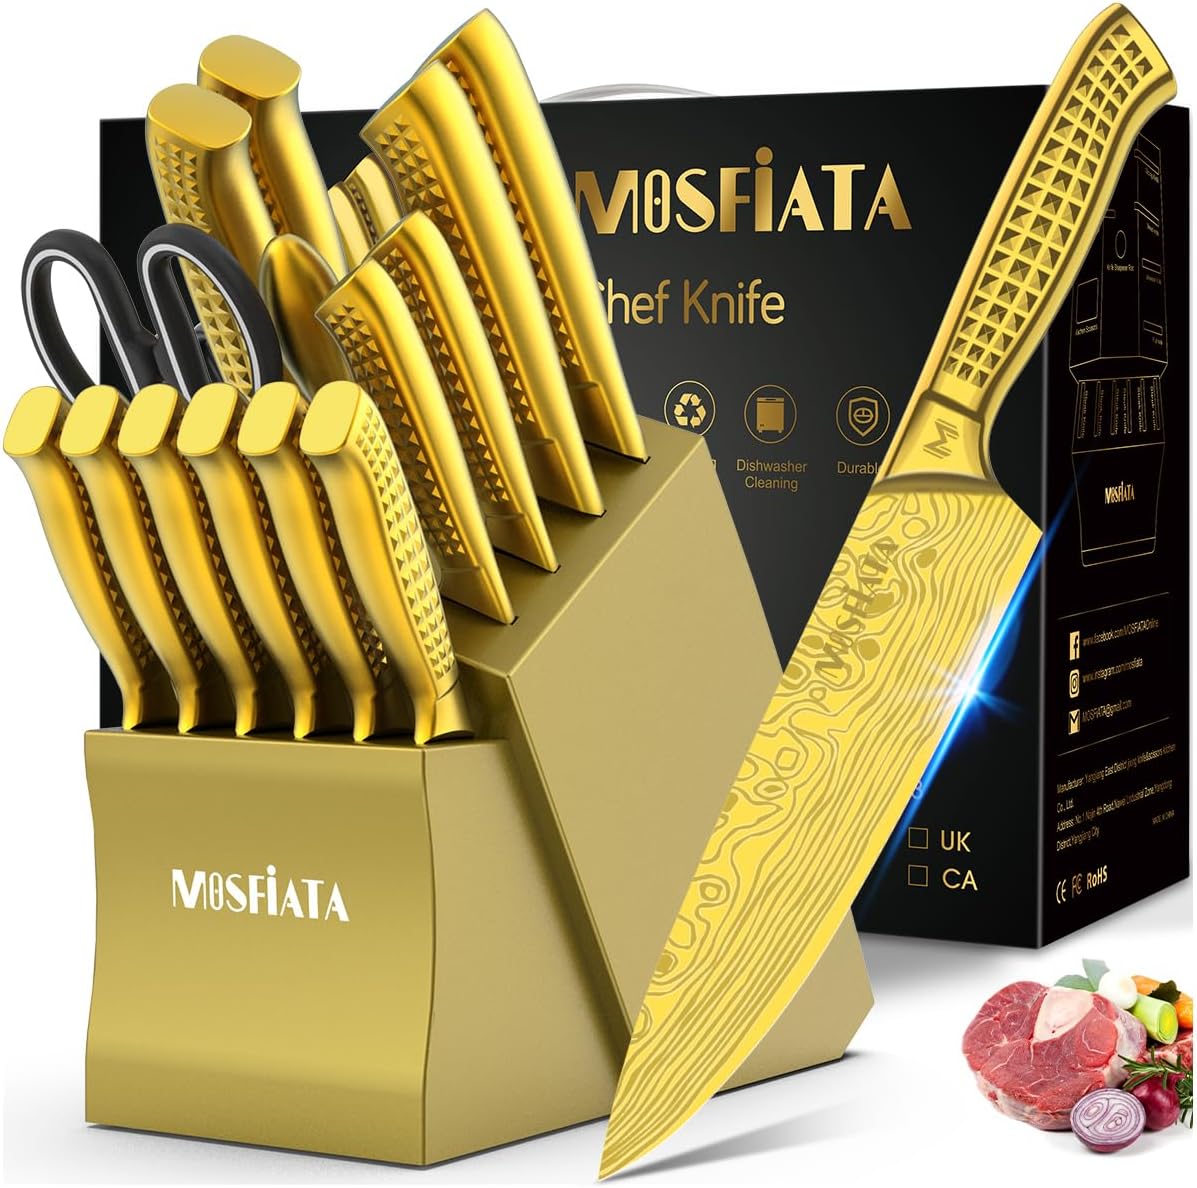  MOSFiATA 7 Piece Kitchen Knife Set, Ultra Sharp Knife